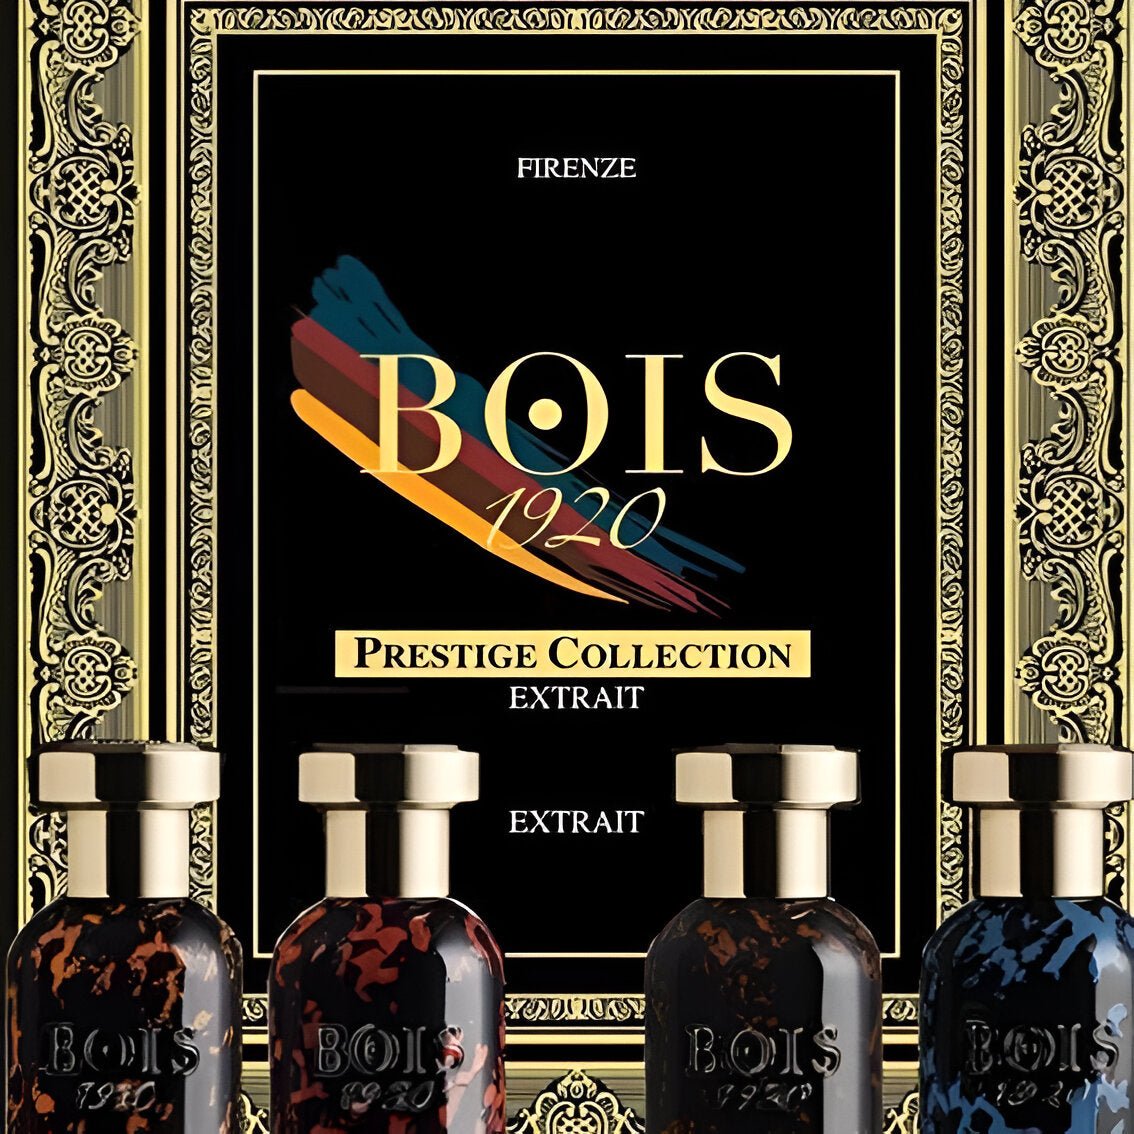 Bois 1920 Fondentarancio Extrait De Parfum | My Perfume Shop Australia